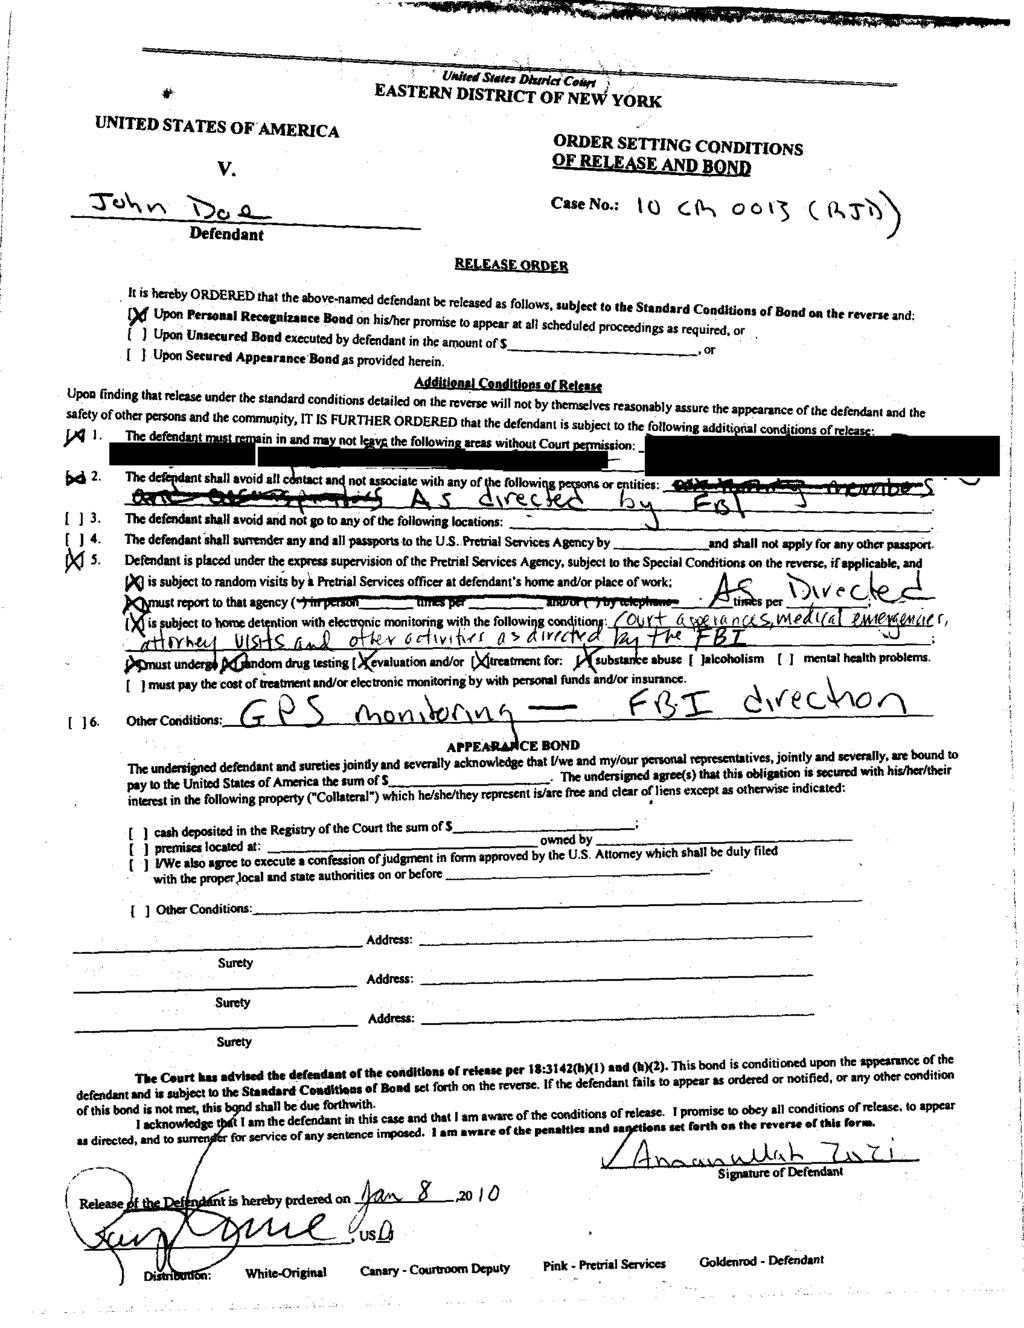 Case 1:10-cr-00013-RJD Document 18